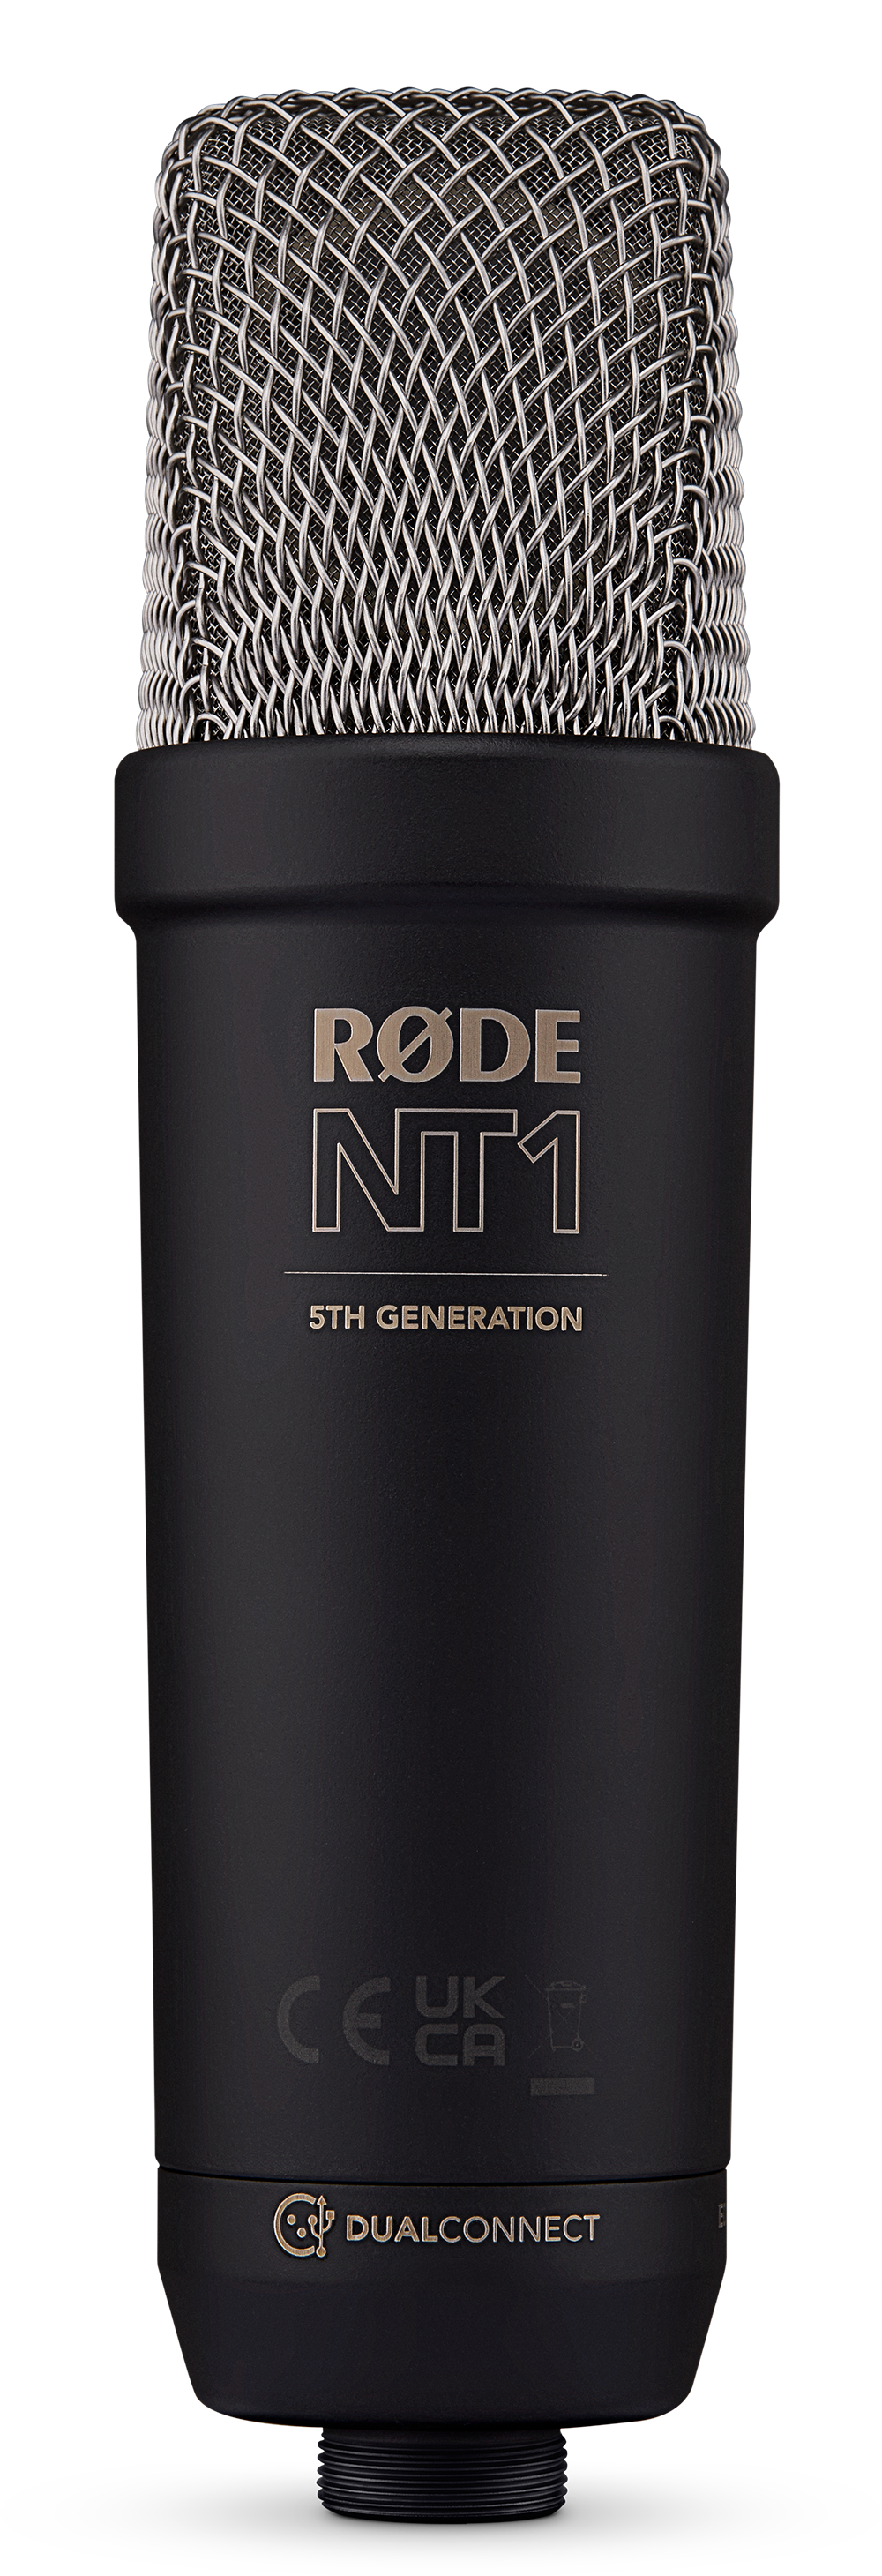 Rode NT1 5th Generation -studiomikrofoni - Musta